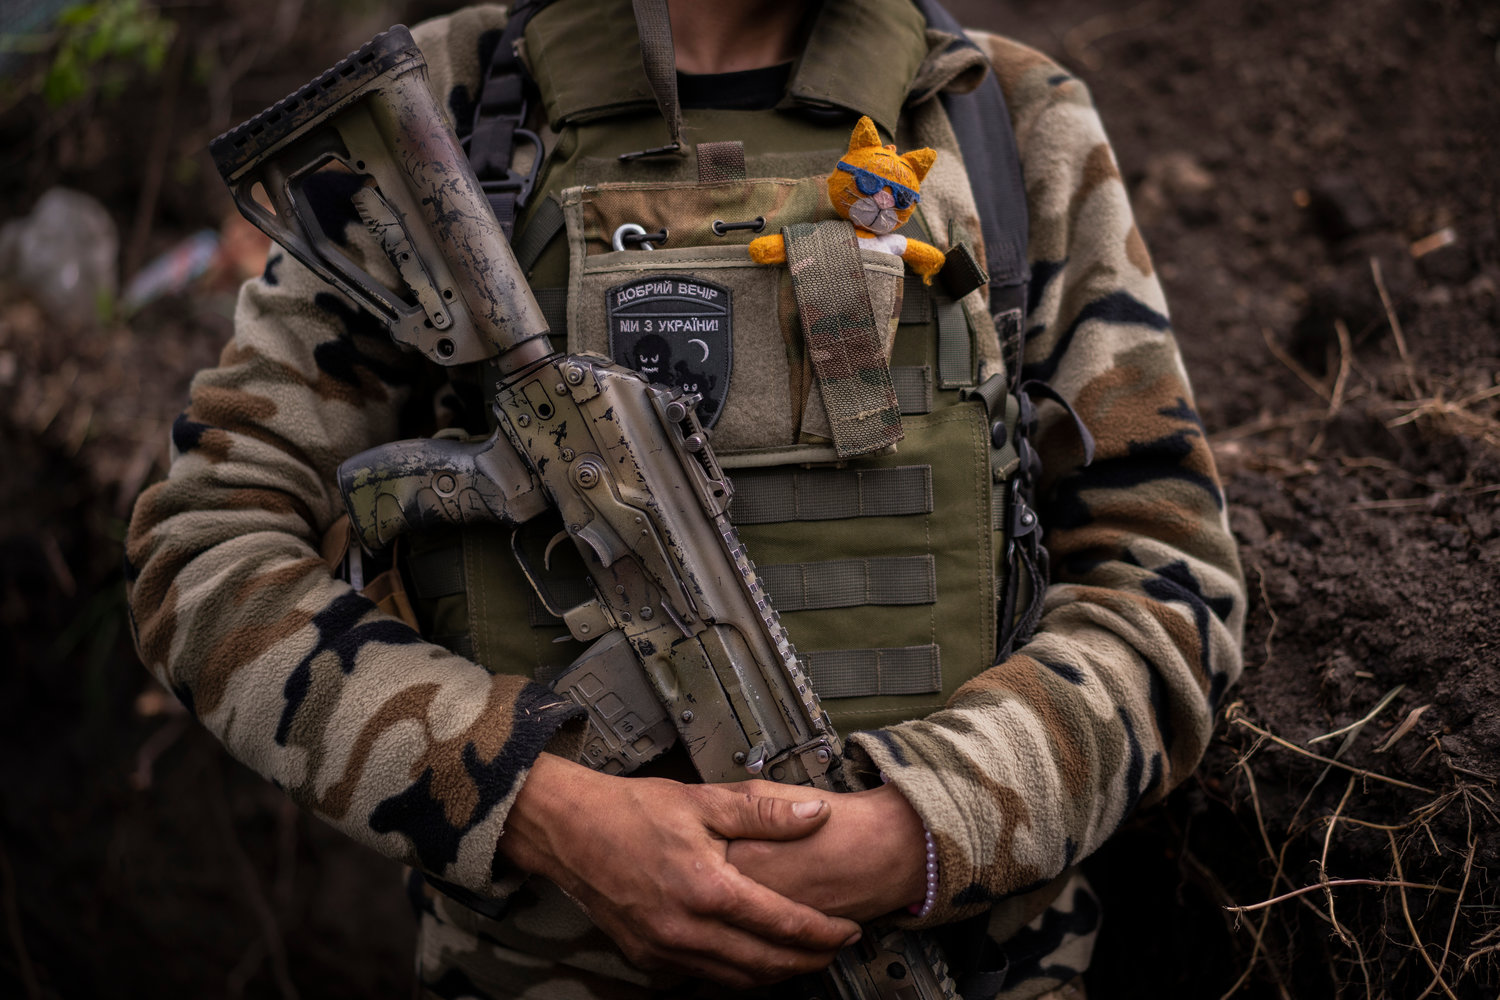 Zhenia, a member of the Ukrainian territorial defence force, guards a position near Kutuzivka, east Ukraine, Friday, May 13, 2022. (AP Photo/Bernat Armangue)